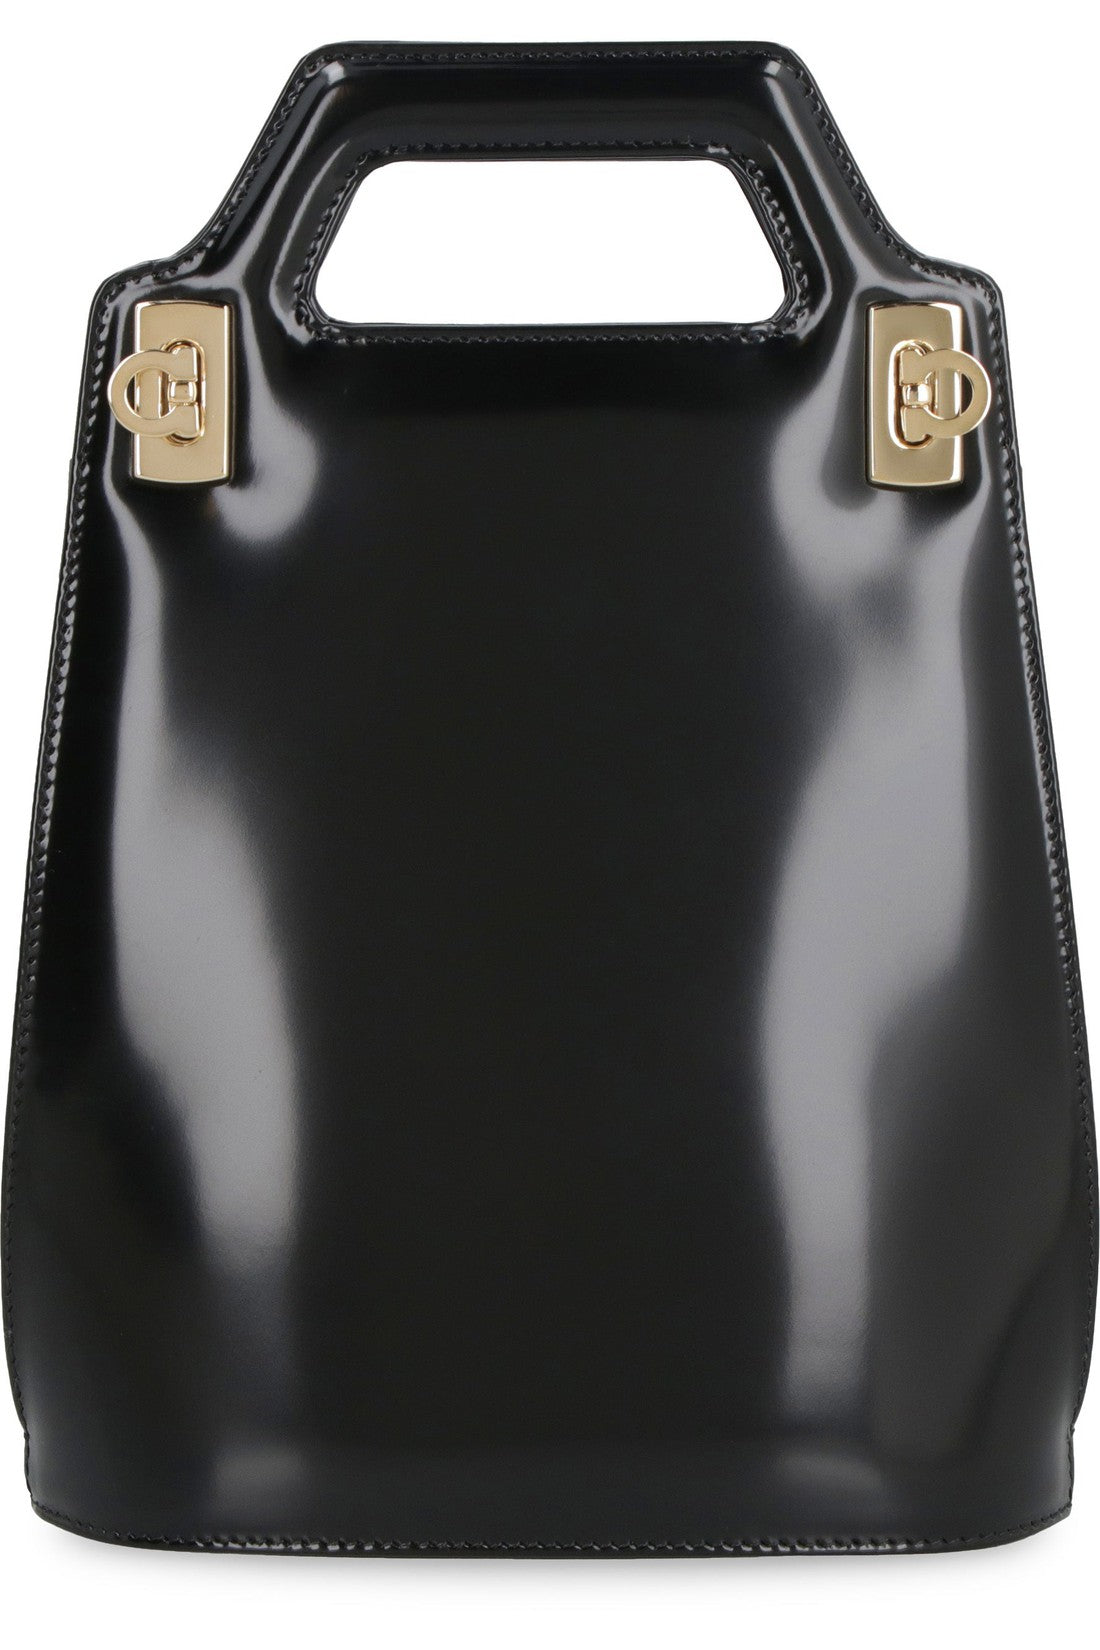 FERRAGAMO-OUTLET-SALE-Wanda leather mini bag-ARCHIVIST